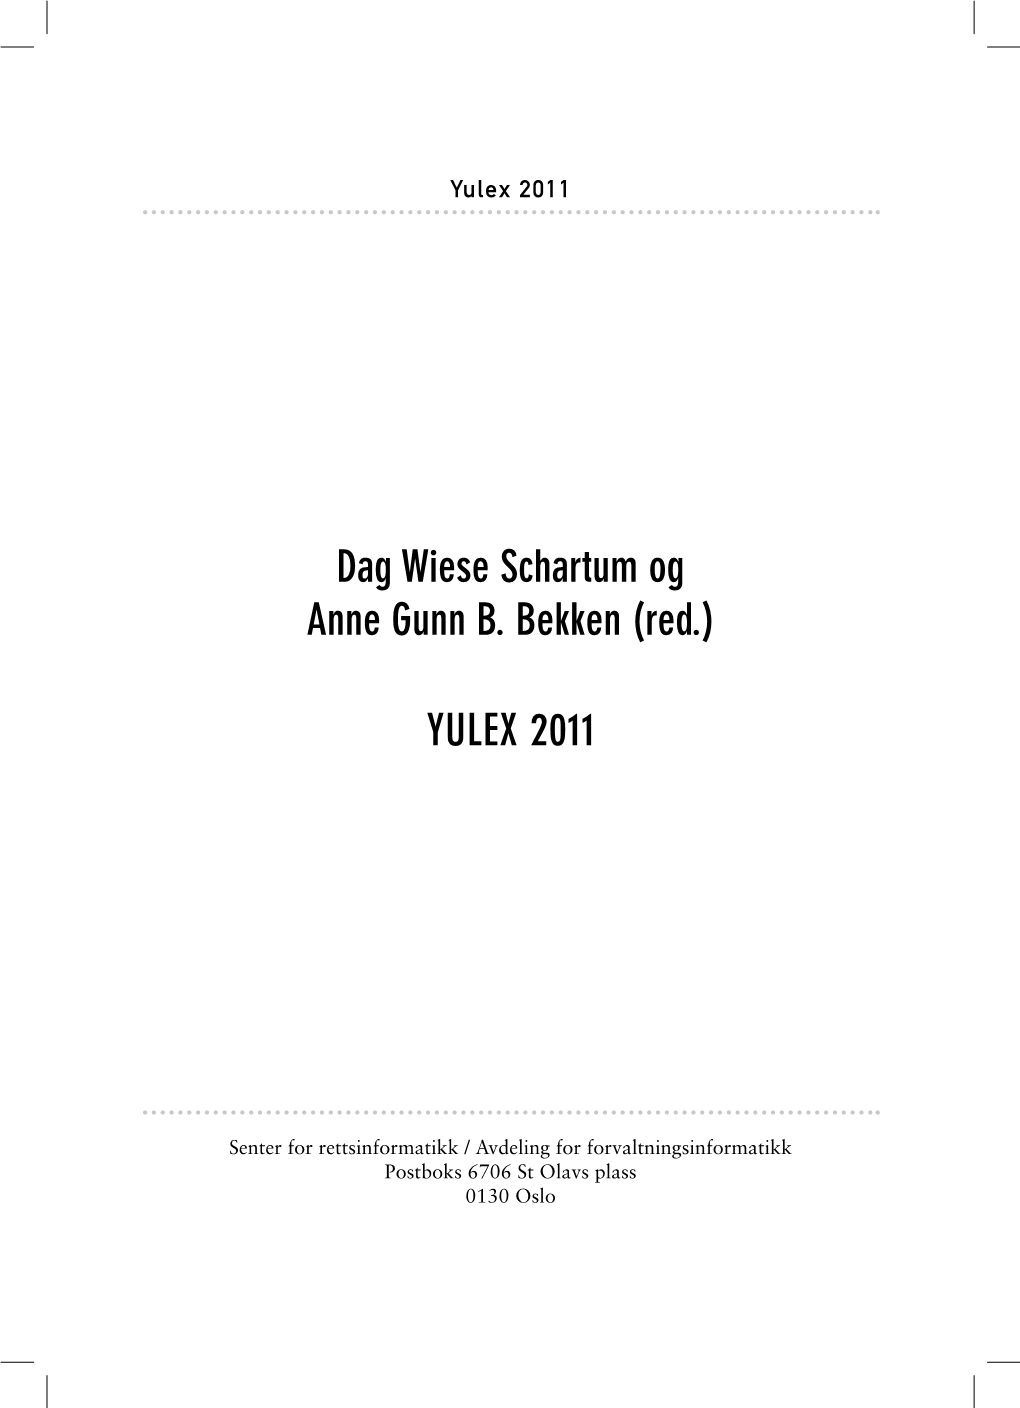 Dag Wiese Schartum Og Anne Gunn B. Bekken (Red.) YULEX 2011